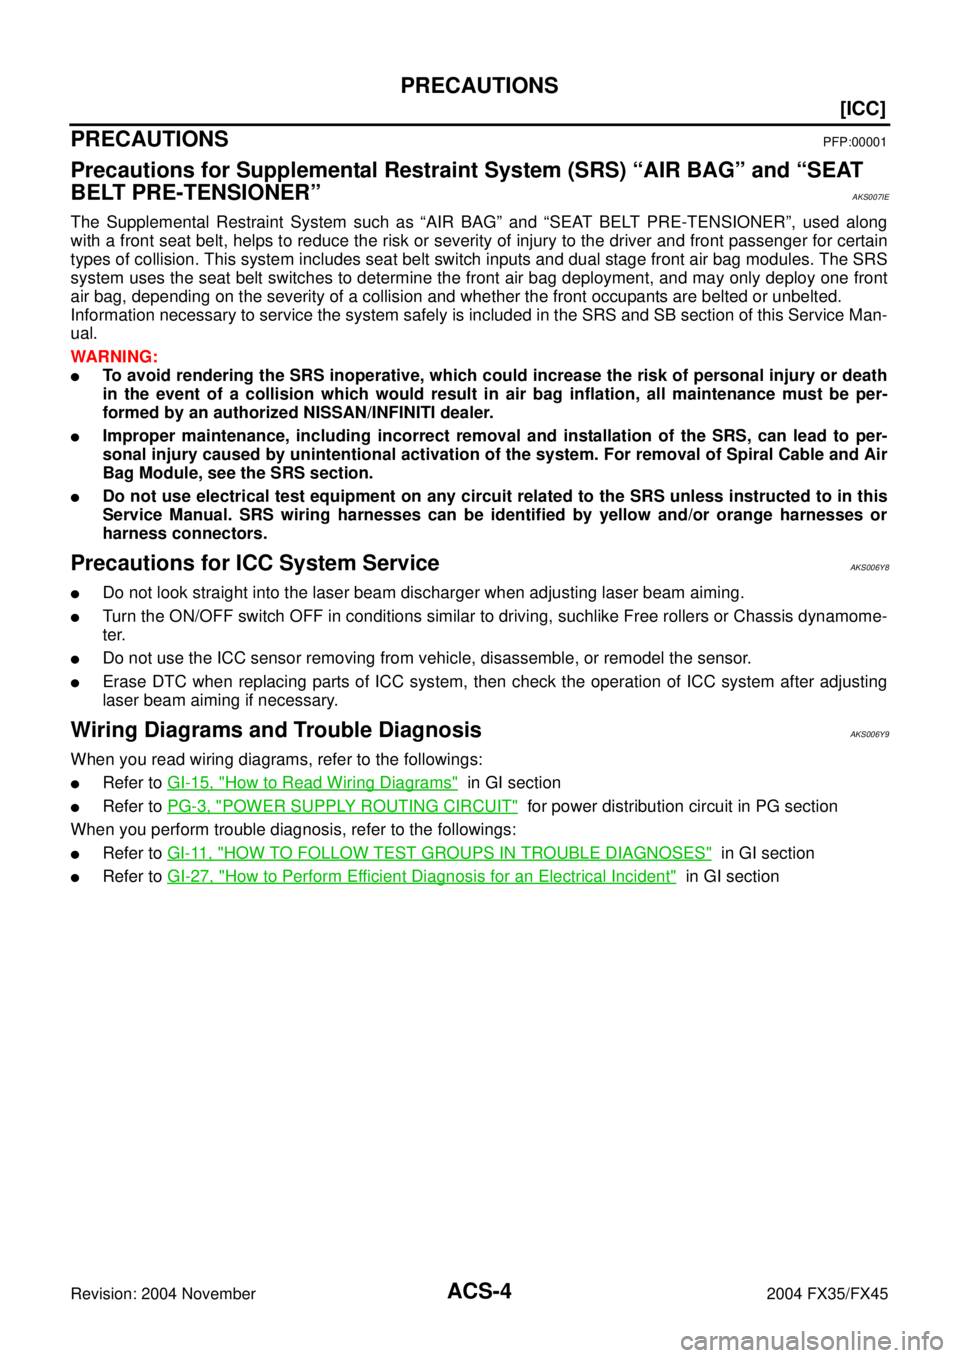 INFINITI FX35 2004  Service Manual ACS-4
[ICC]
PRECAUTIONS
Revision: 2004 November 2004 FX35/FX45
[ICC]PRECAUTIONSPFP:00001
Precautions for Supplemental Restraint System (SRS) “AIR BAG” and “SEAT 
BELT PRE-TENSIONER”
AKS007IE
T